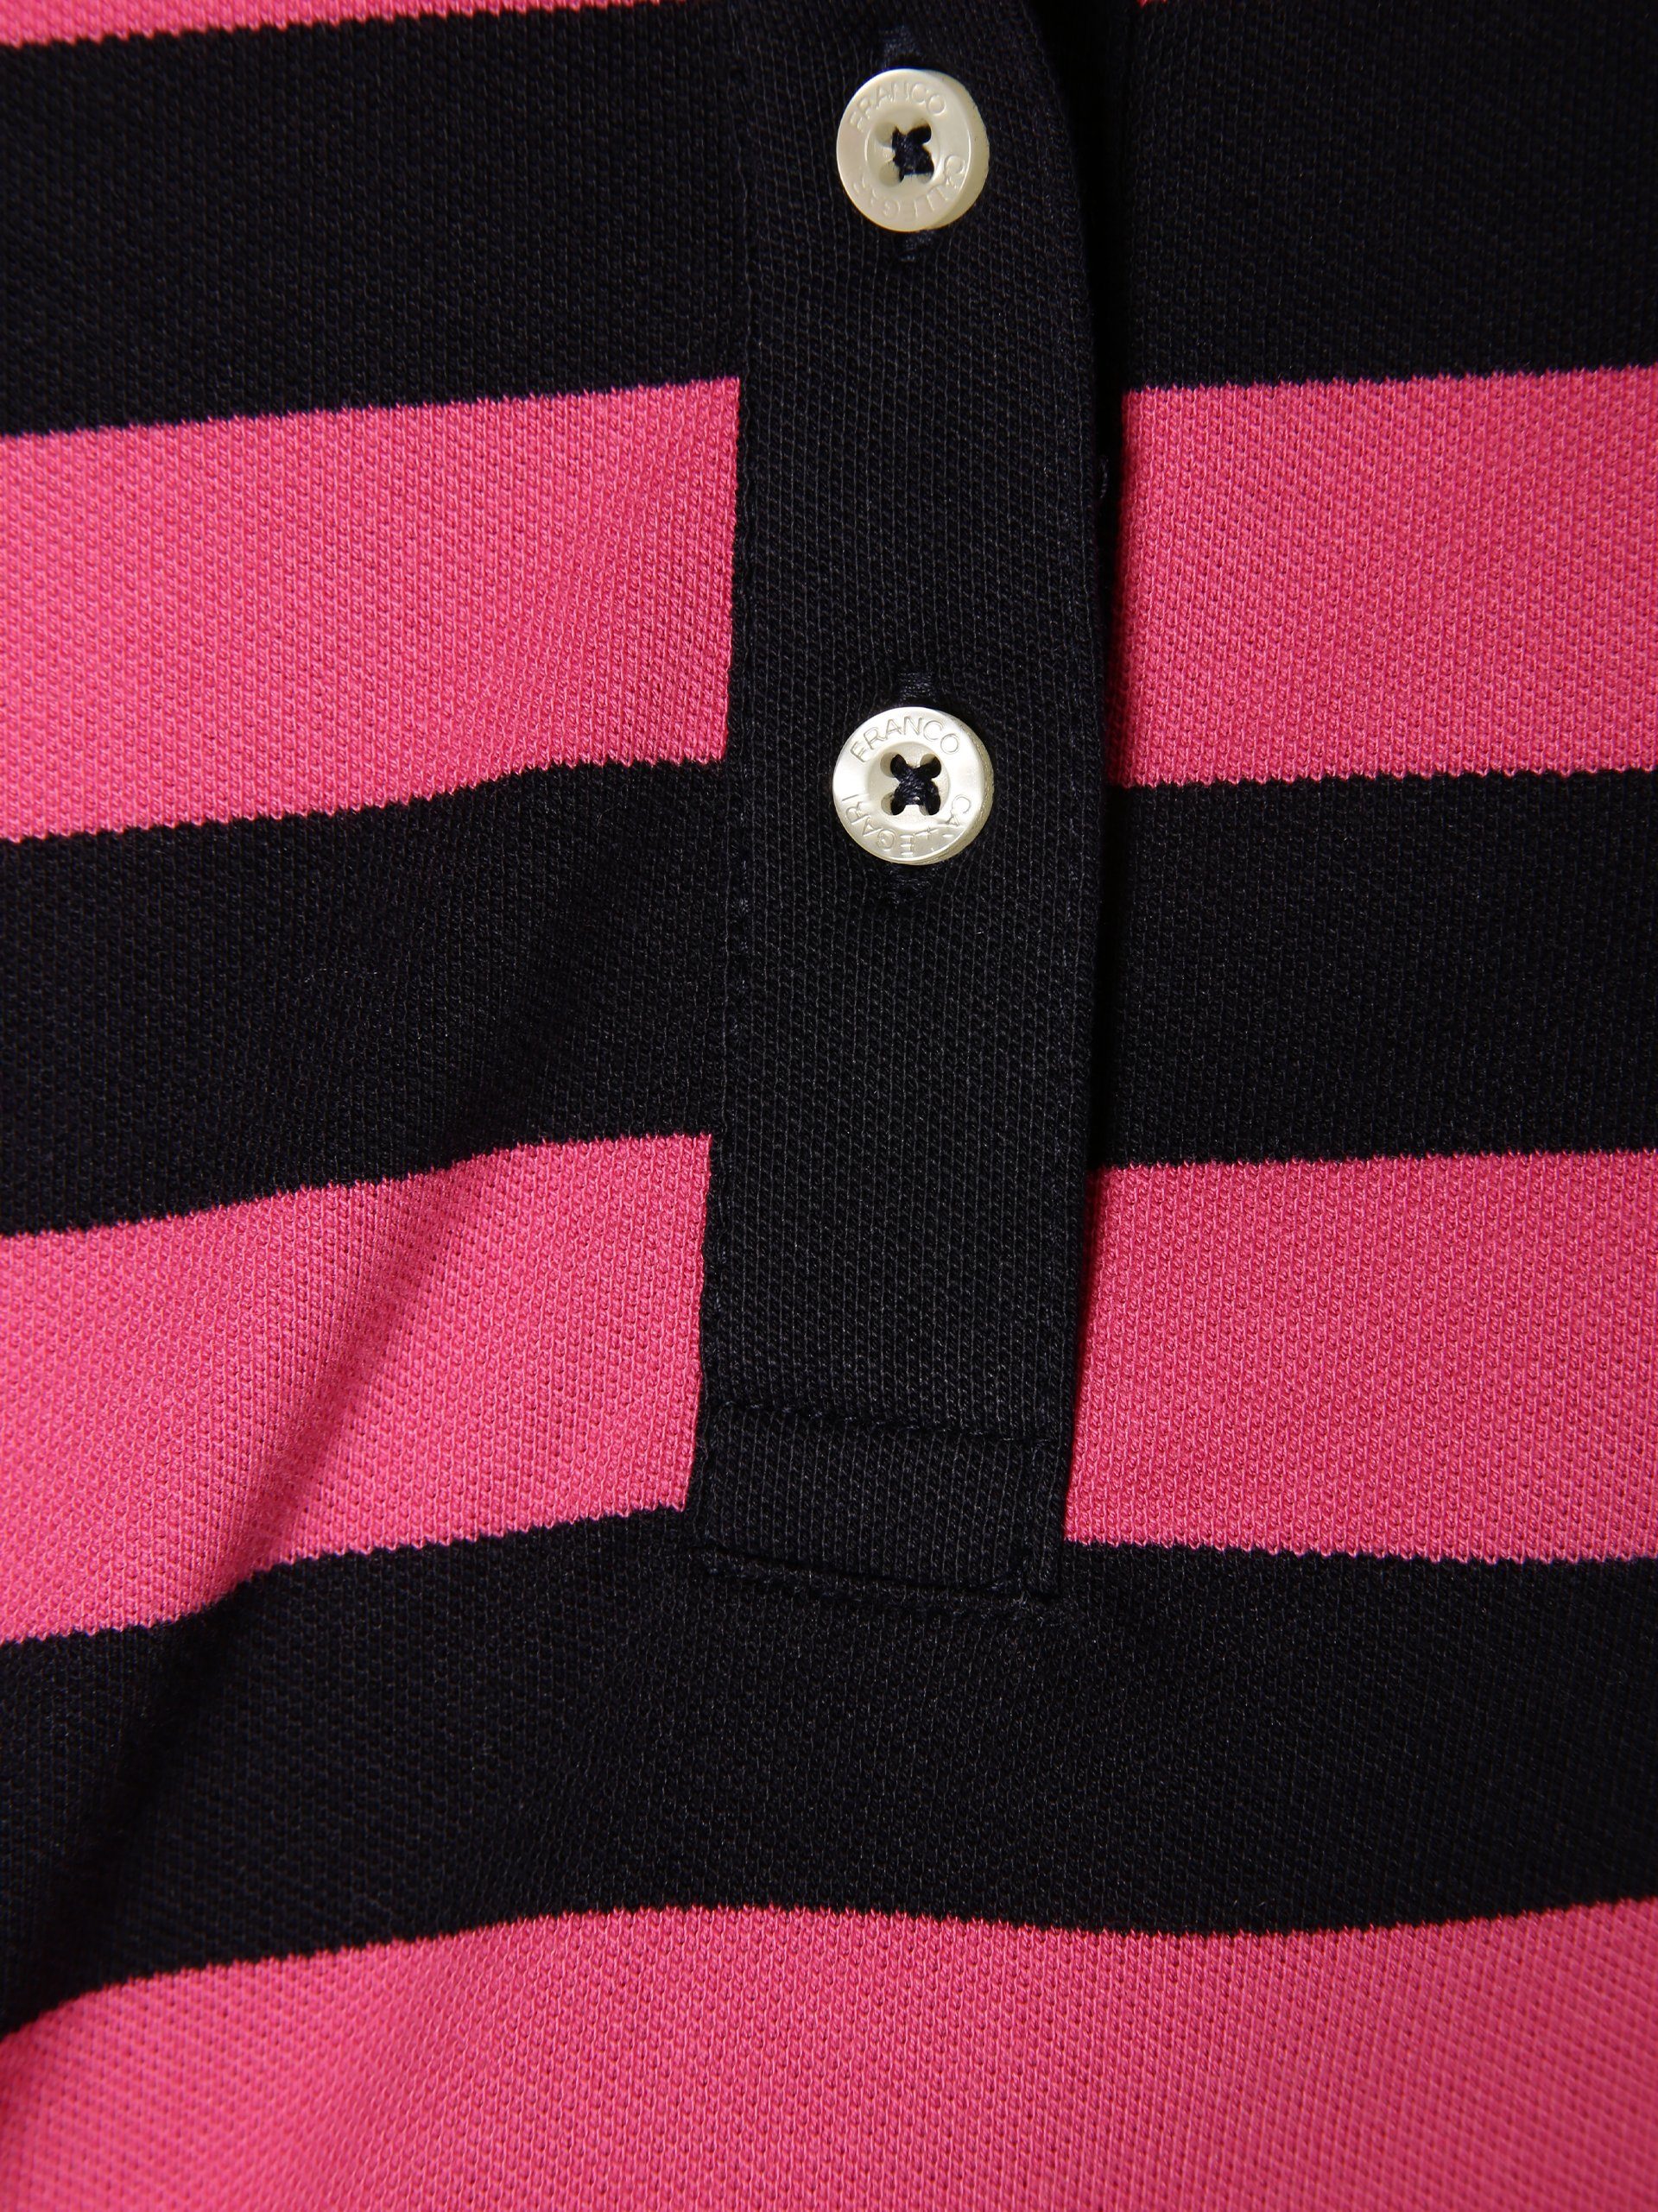 Franco Callegari Poloshirt marine pink